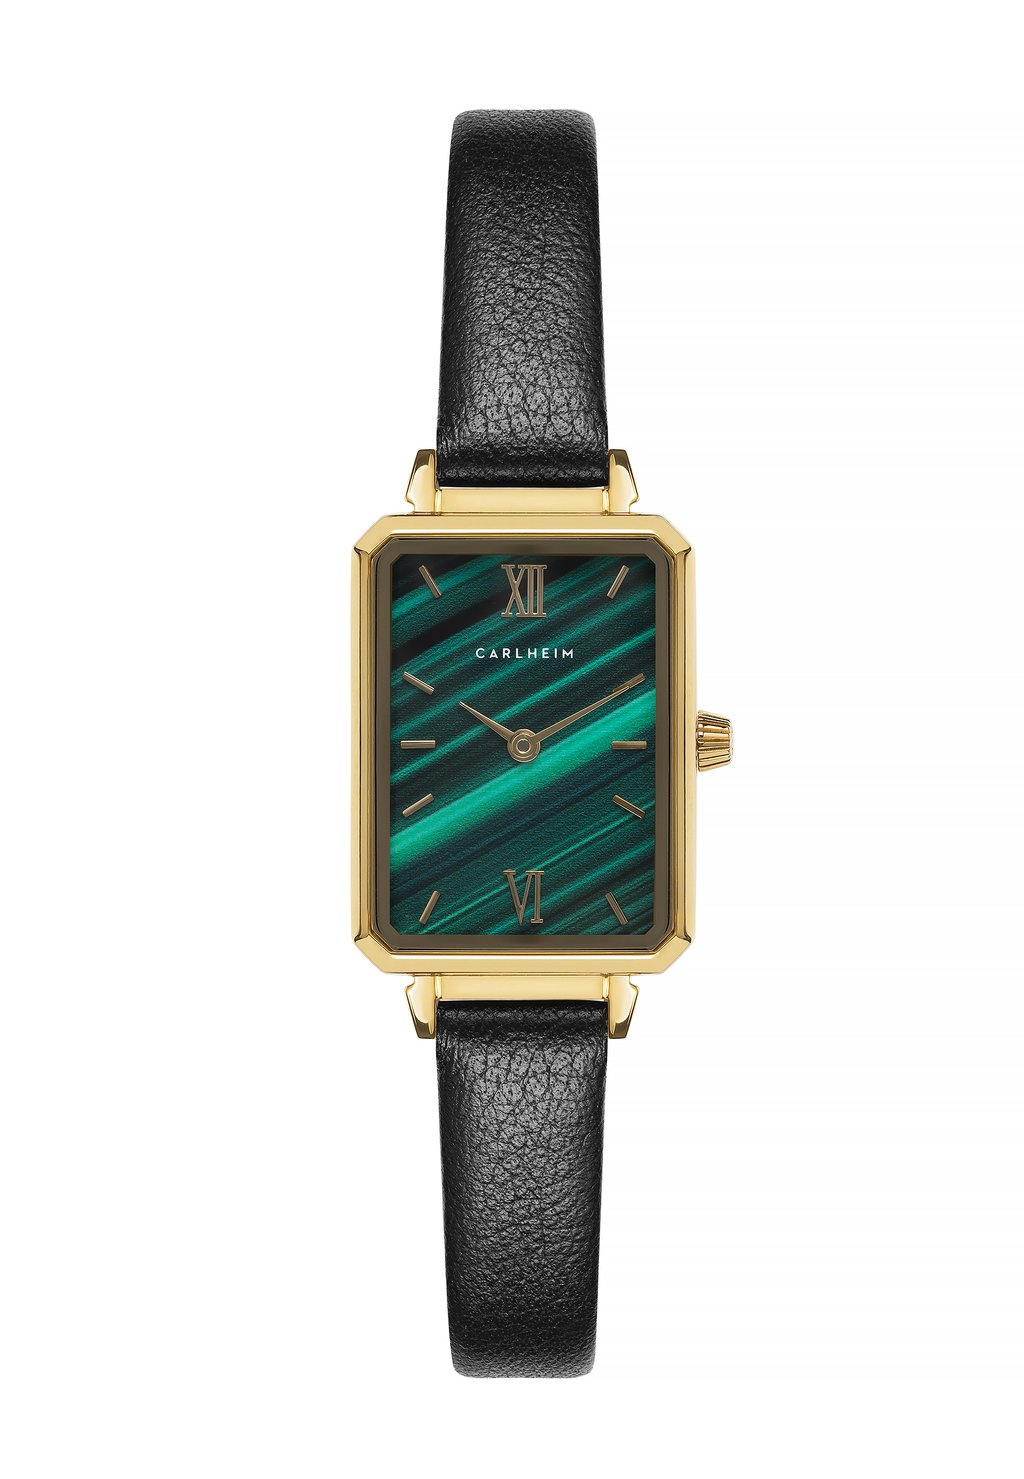 Часы PETIT MILA Carlheim, цвет gold green black цена и фото